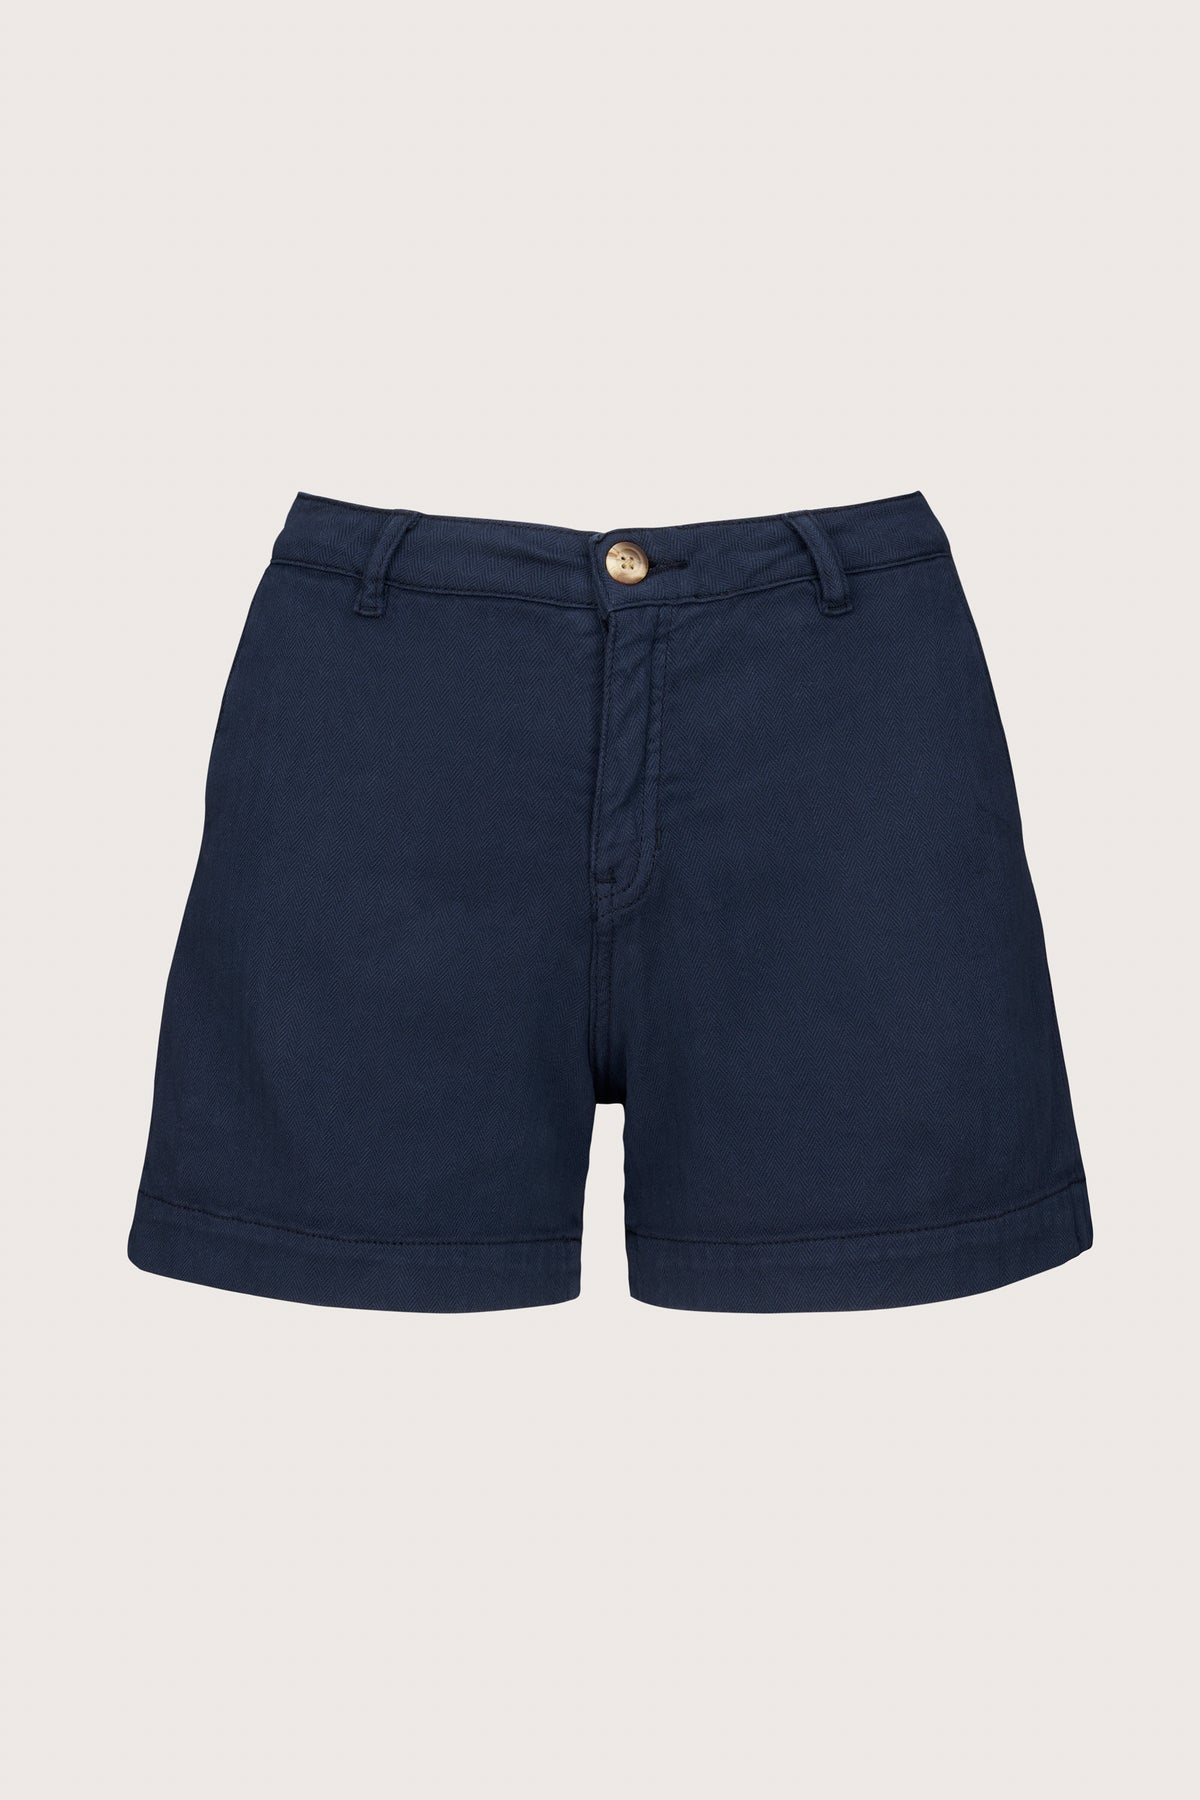 Navy shorts in a chevron twill